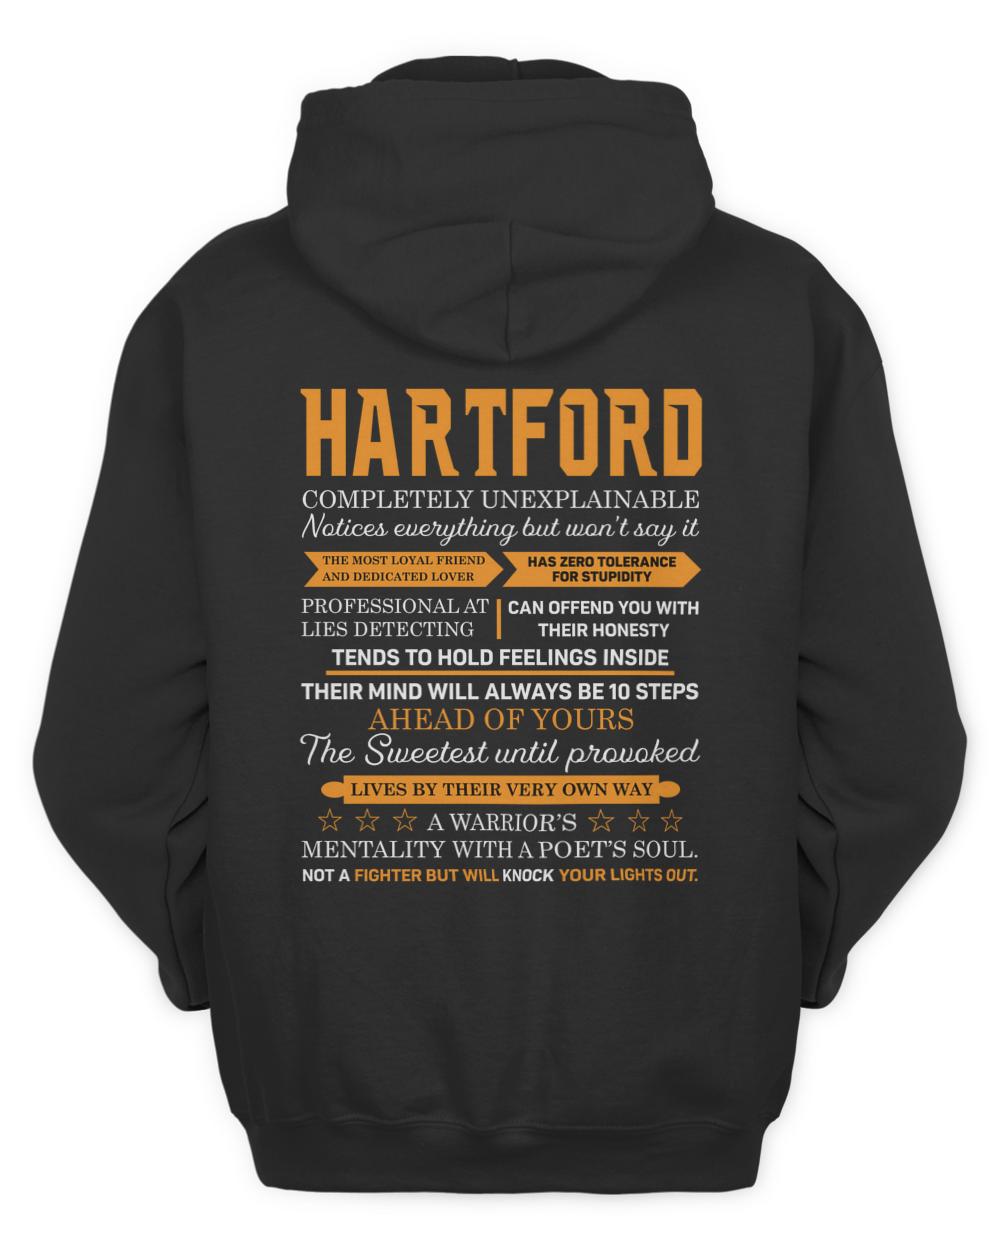 HARTFORD-A15-N1